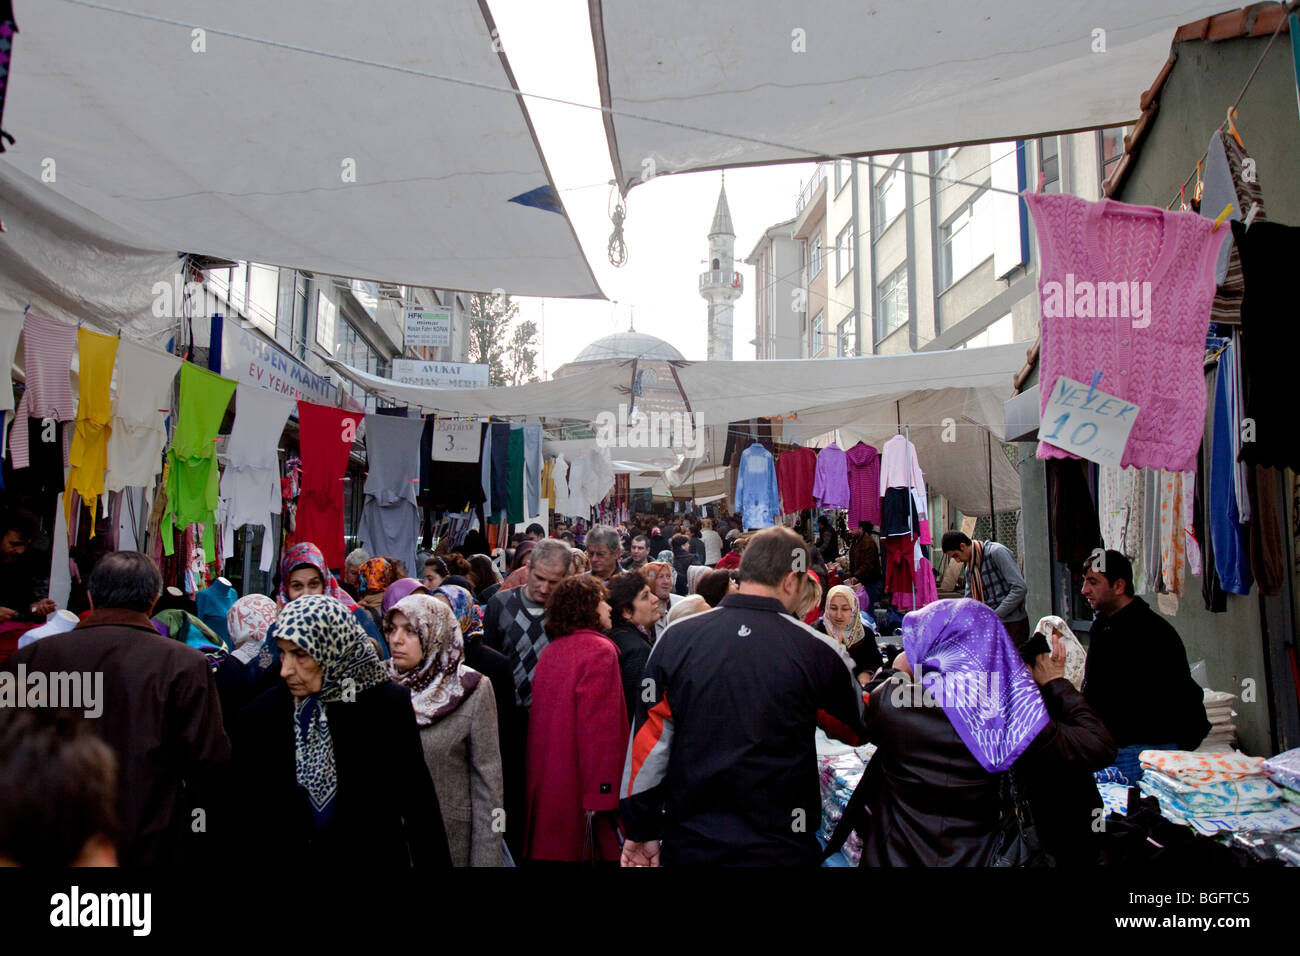 Busy street with market stalls in Eminonu , Istanbul, Turkey. Stock Photo